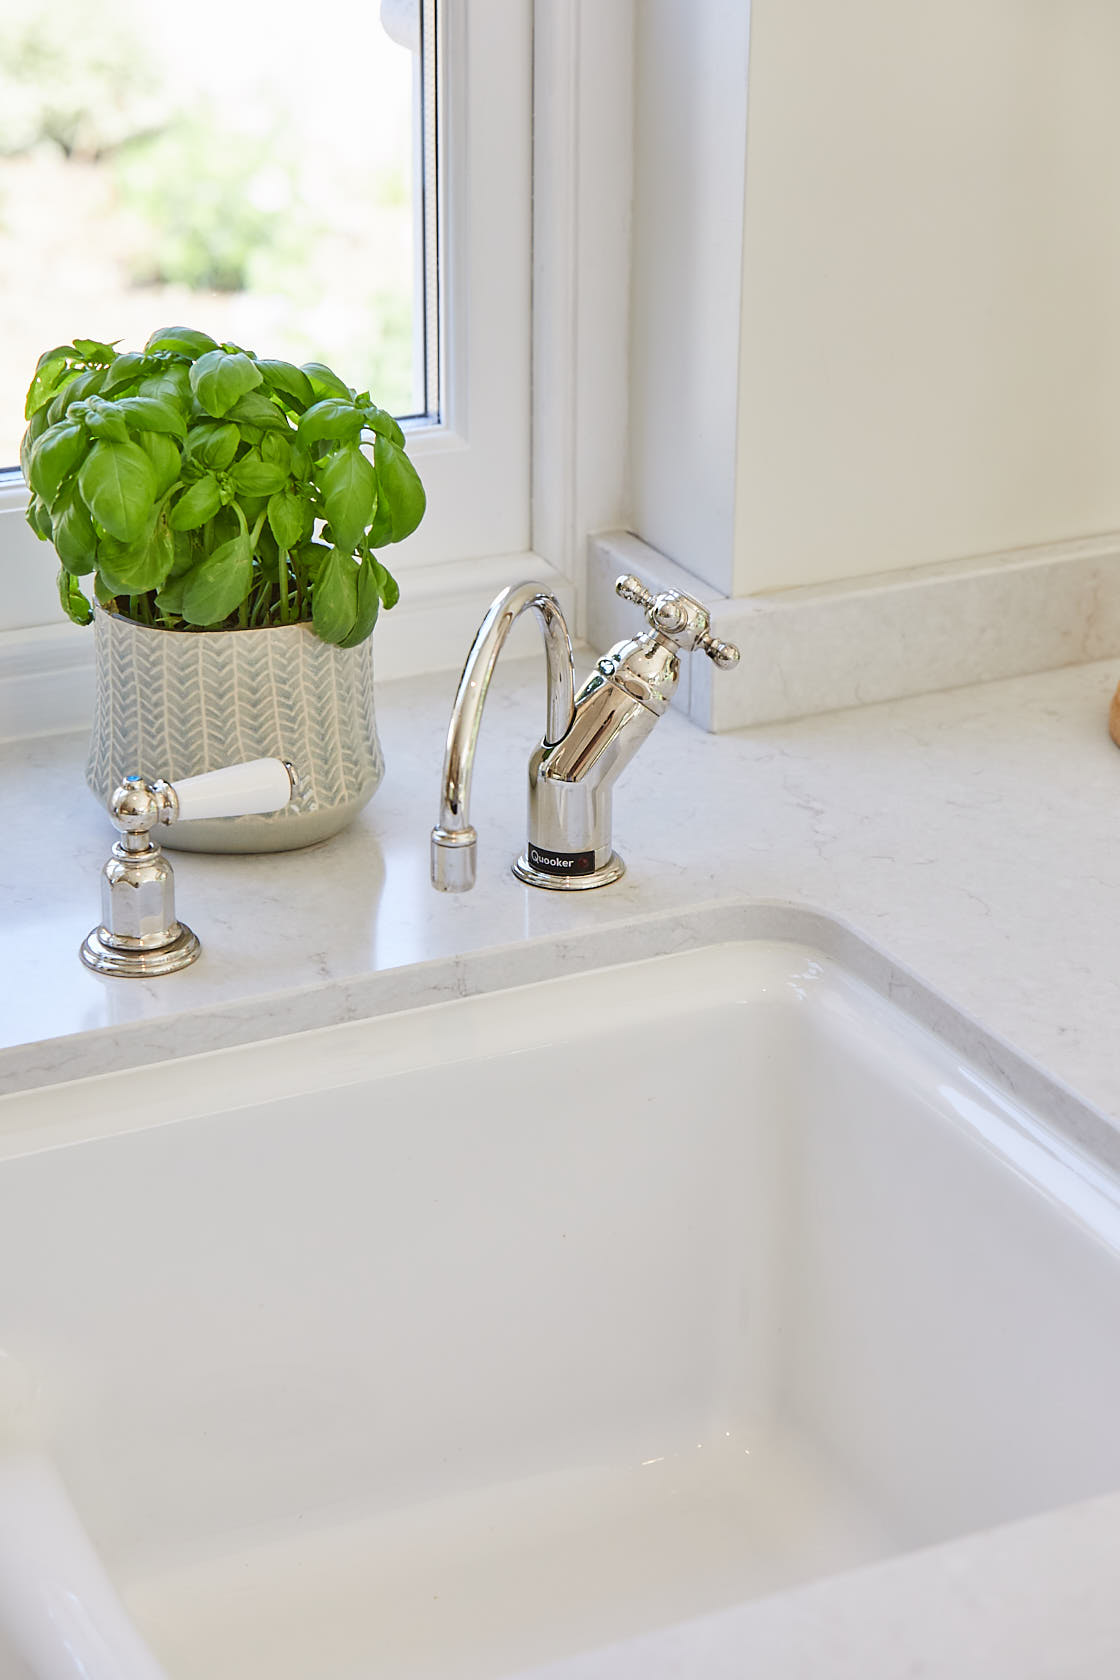 Quooker hot tap in chrome finish above single ceramic square sink